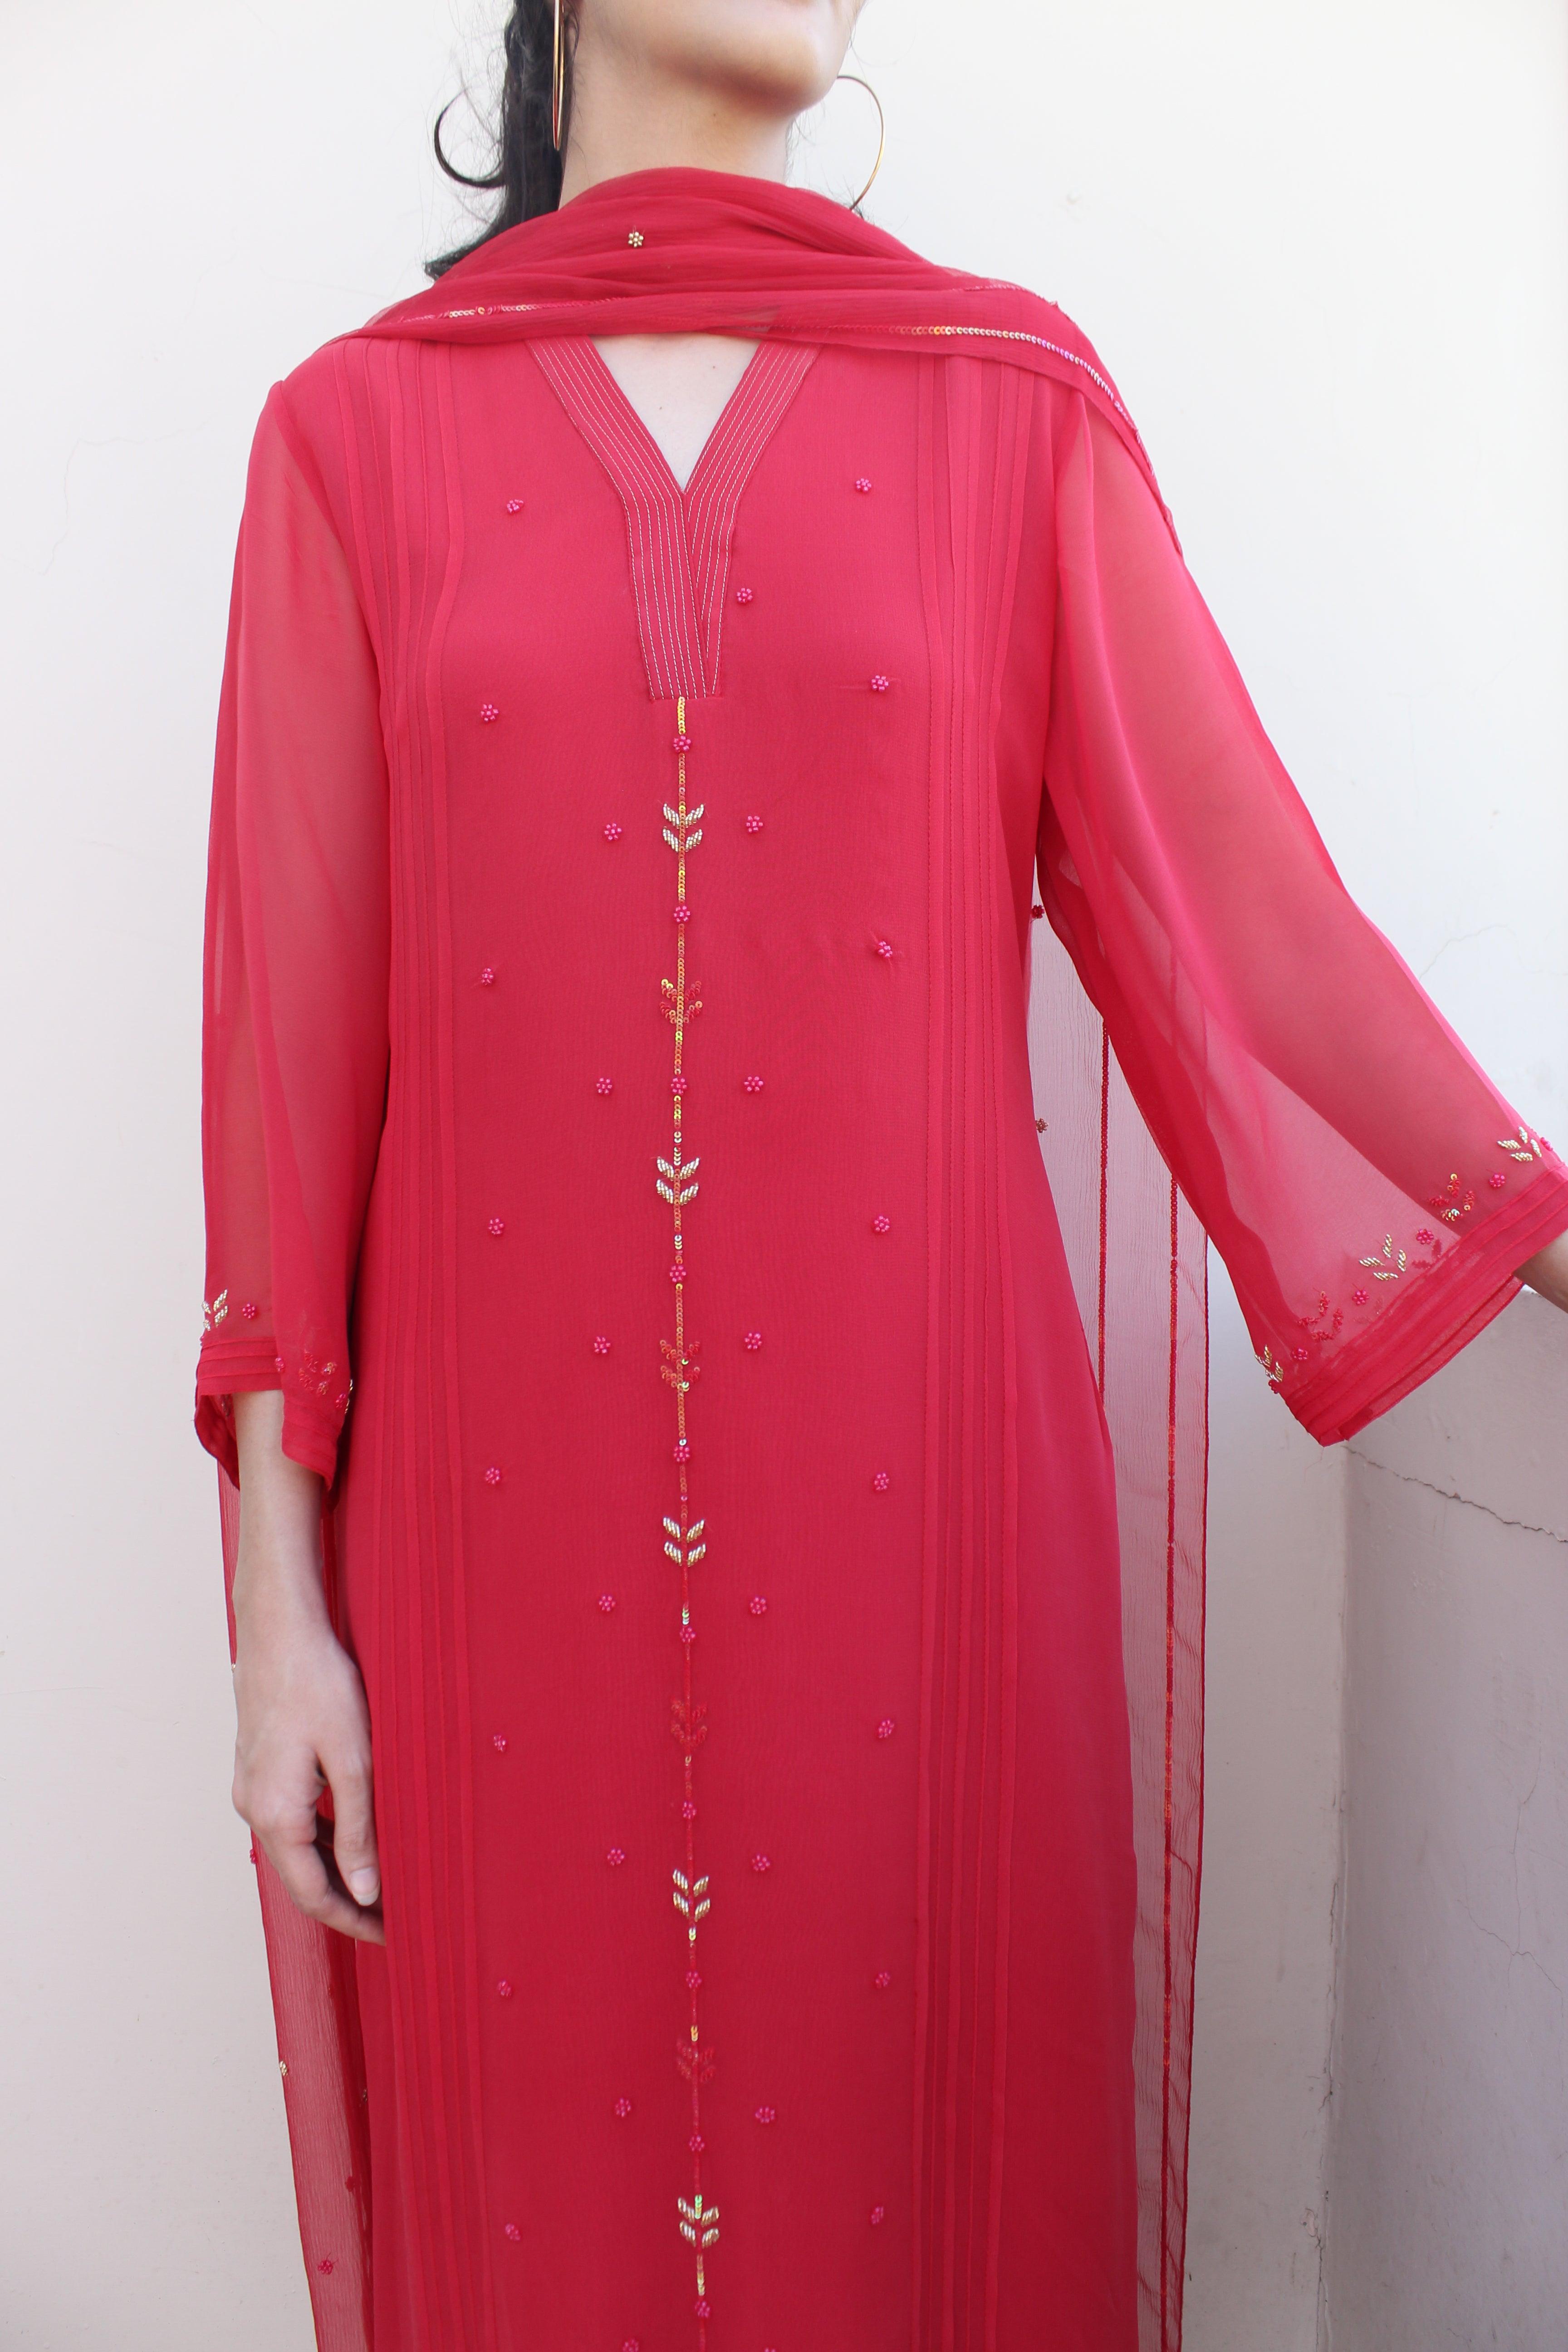 Georgette Dress Fabric - Claret Red